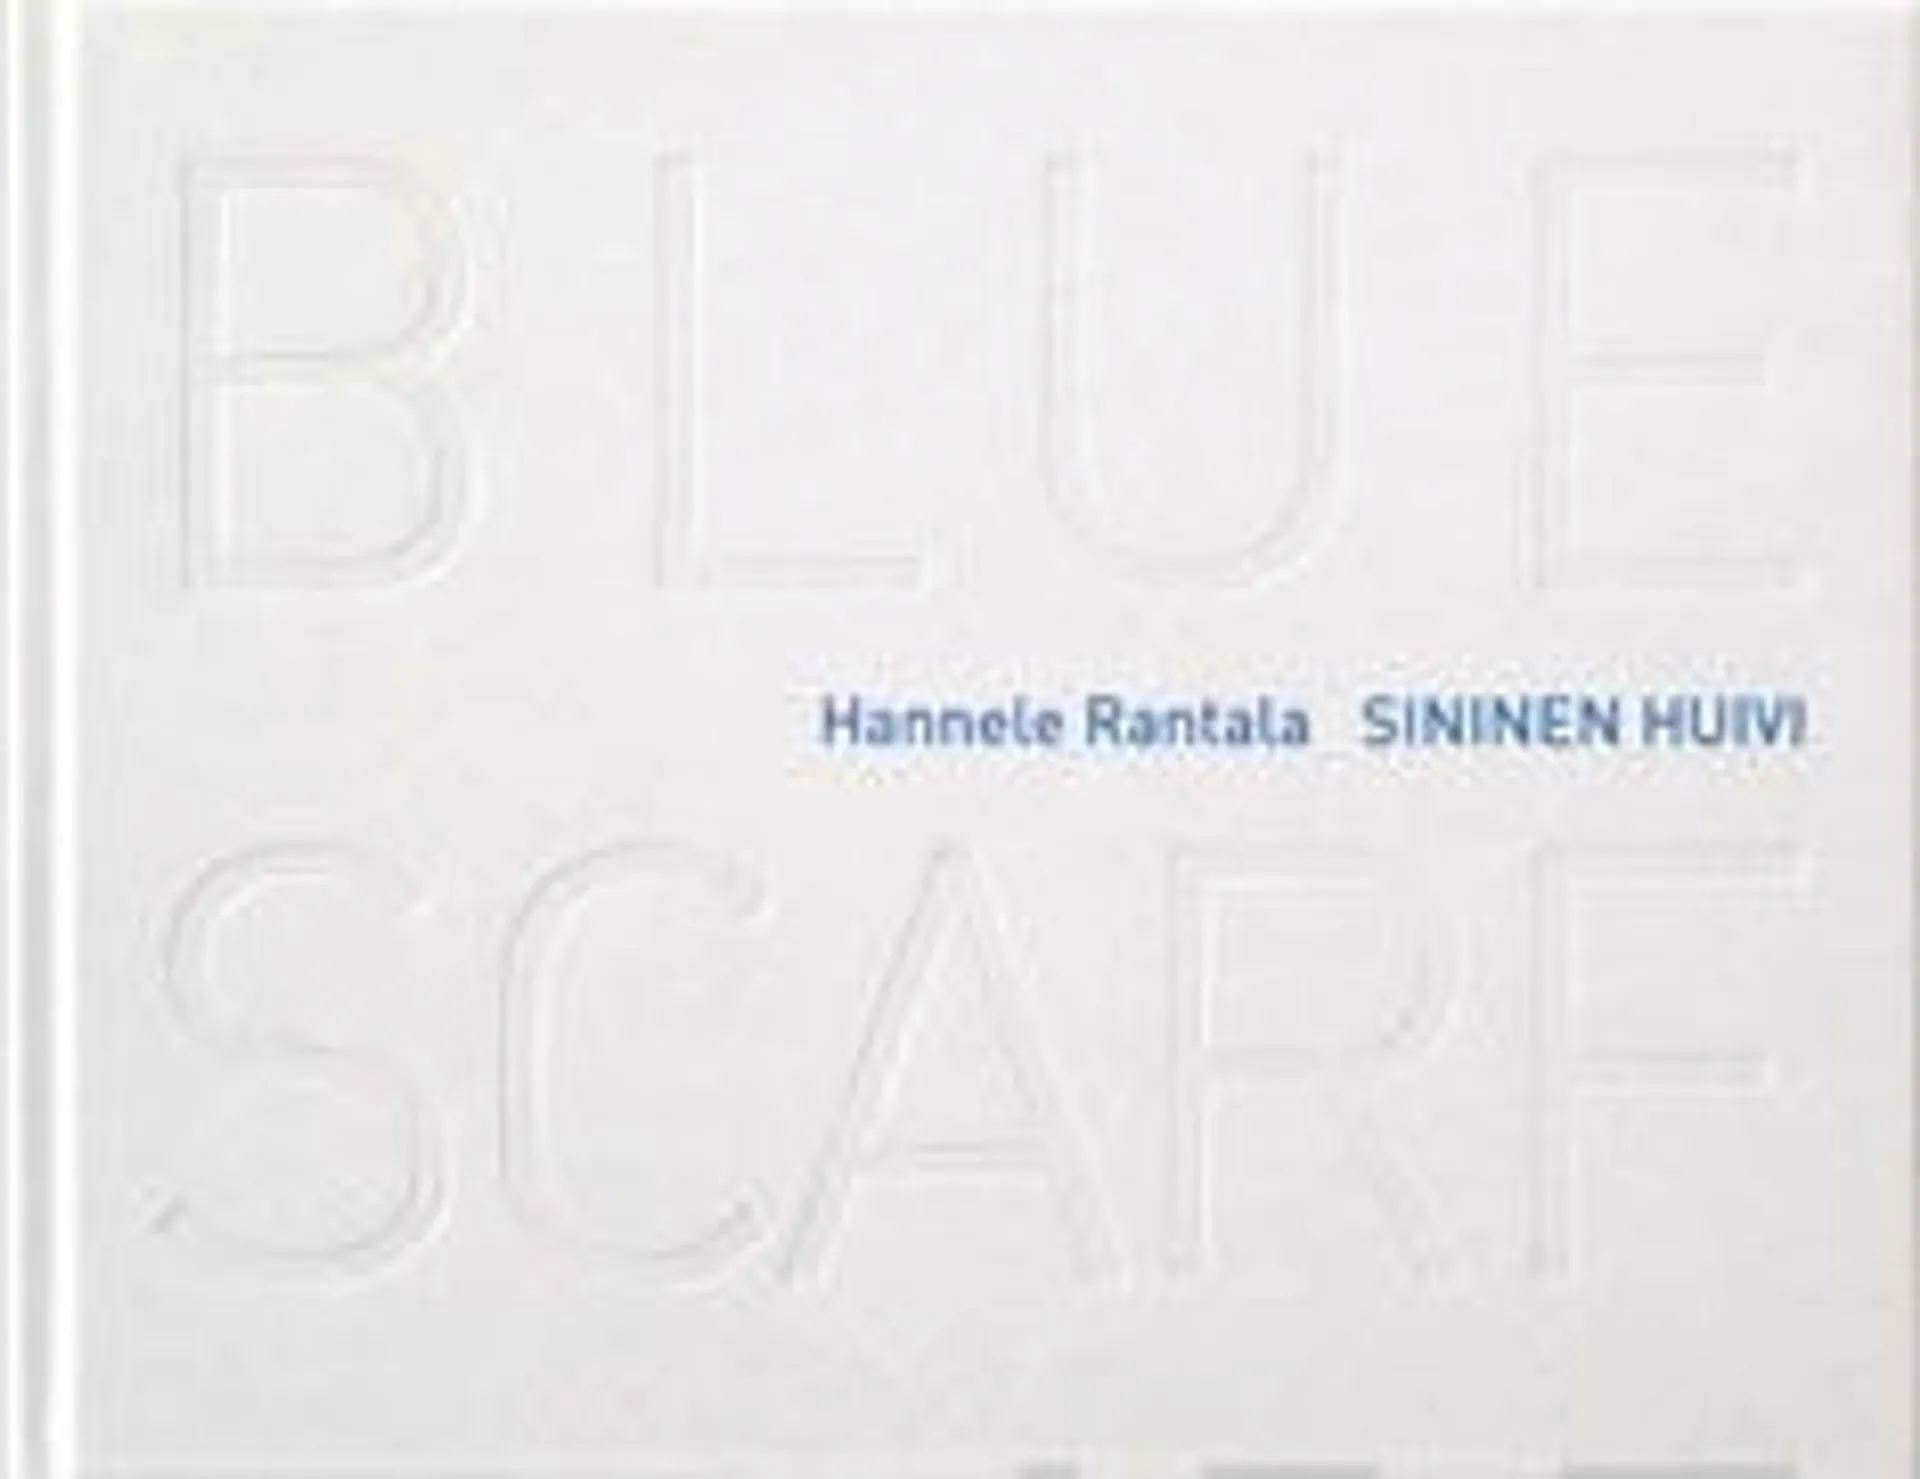 Sininen huivi - Blue Scarf